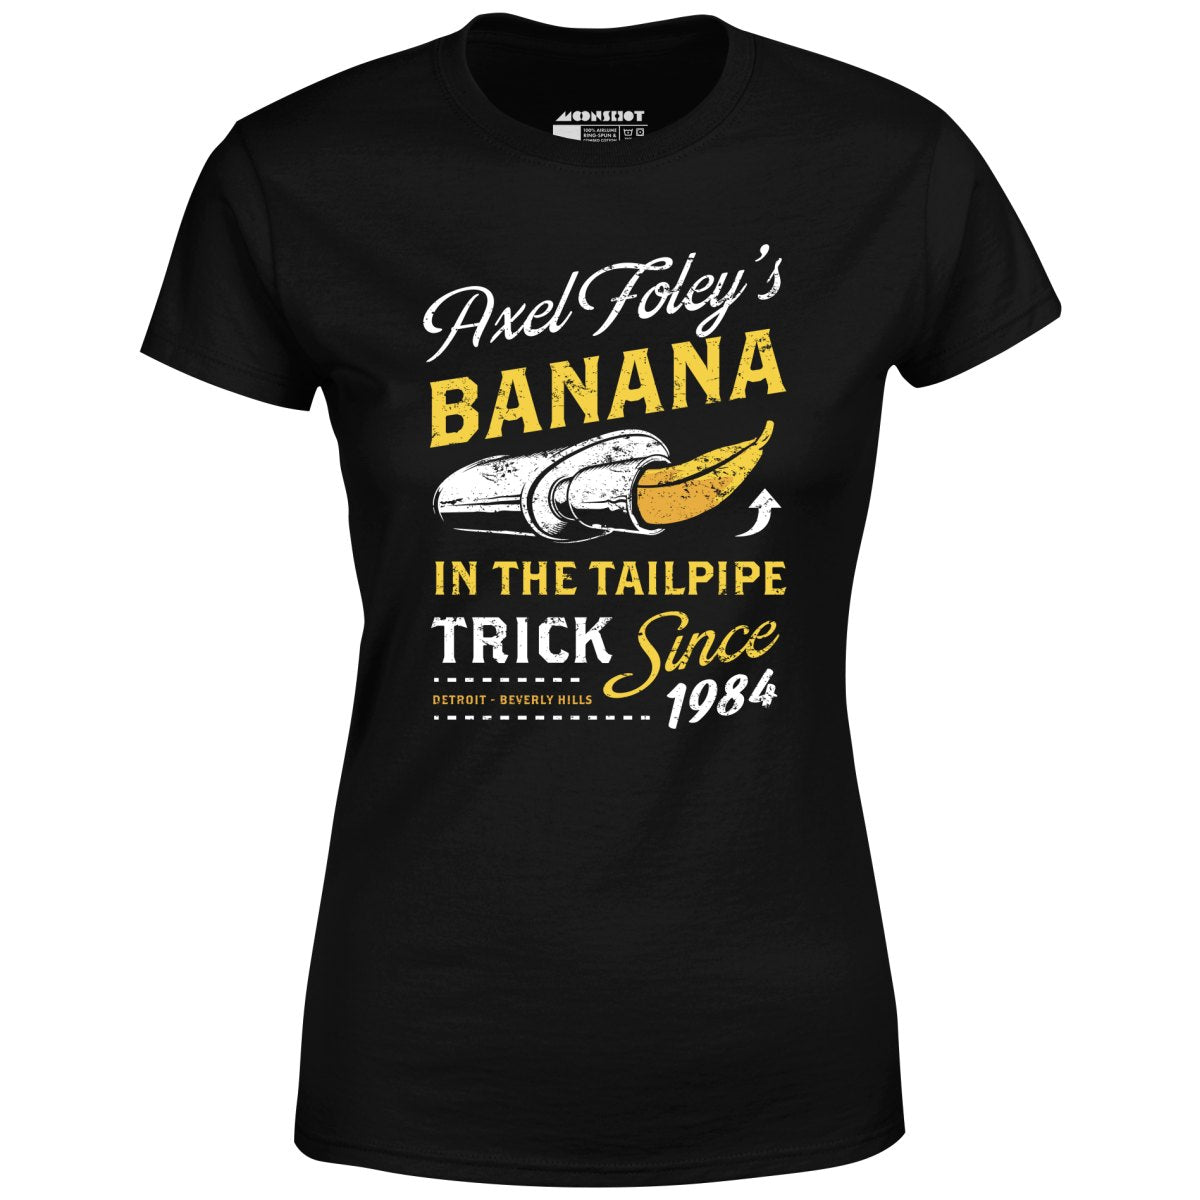 Axel Foley's Banana in the Tailpipe Trick - Women's T-Shirt